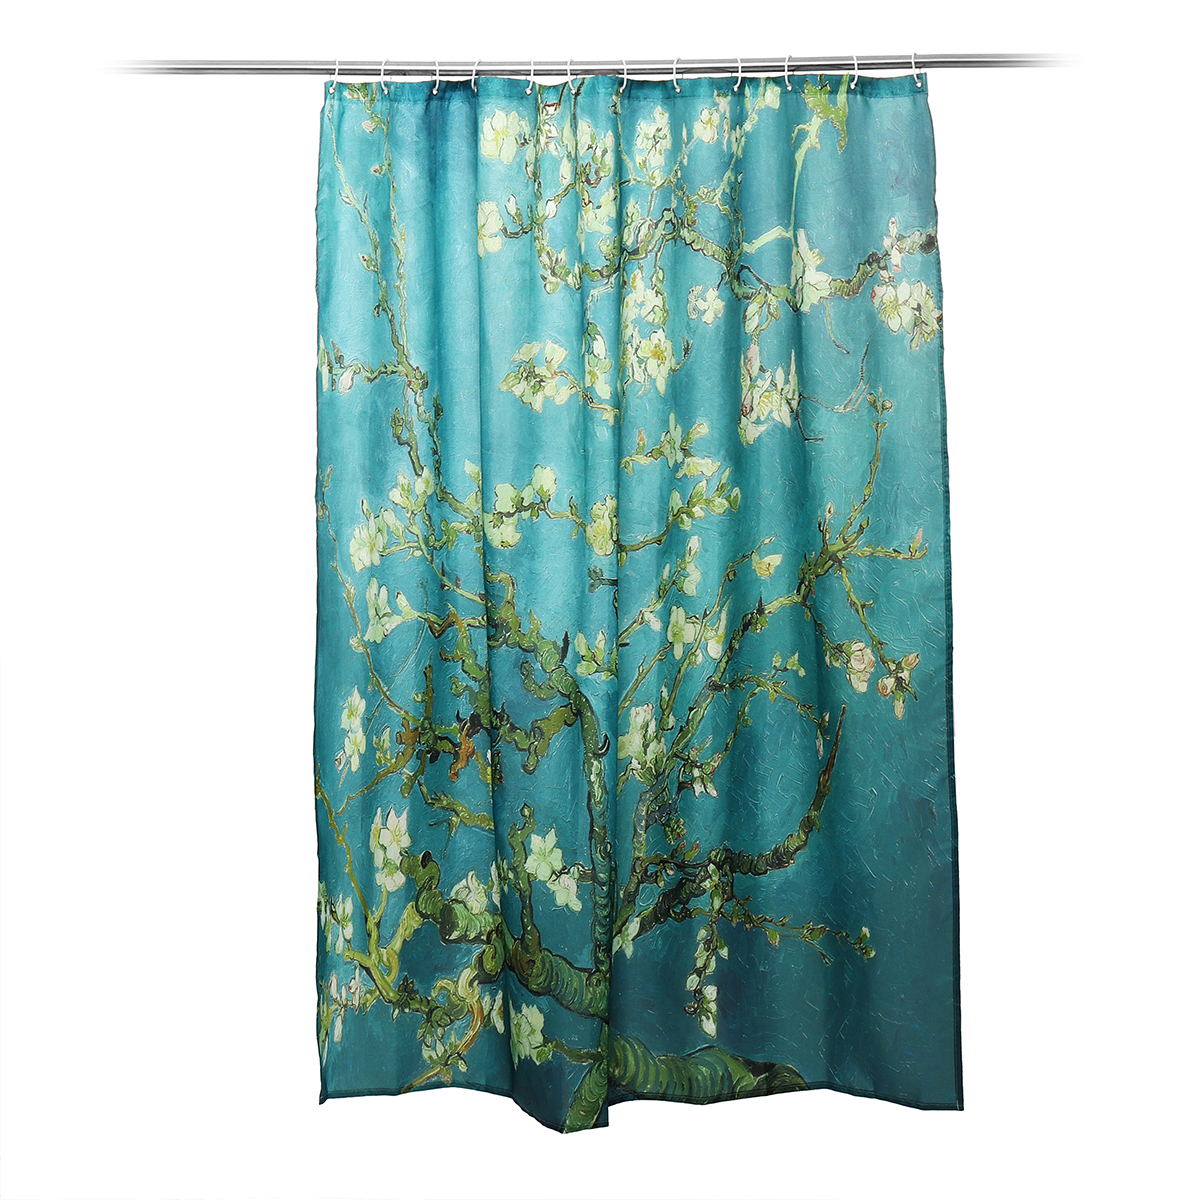 Flower-Waterproof-Shower-Curtain-Waterproof-Polyester-Fabric-Bathroom-Curtains-for-12-Hooks-1552627-8